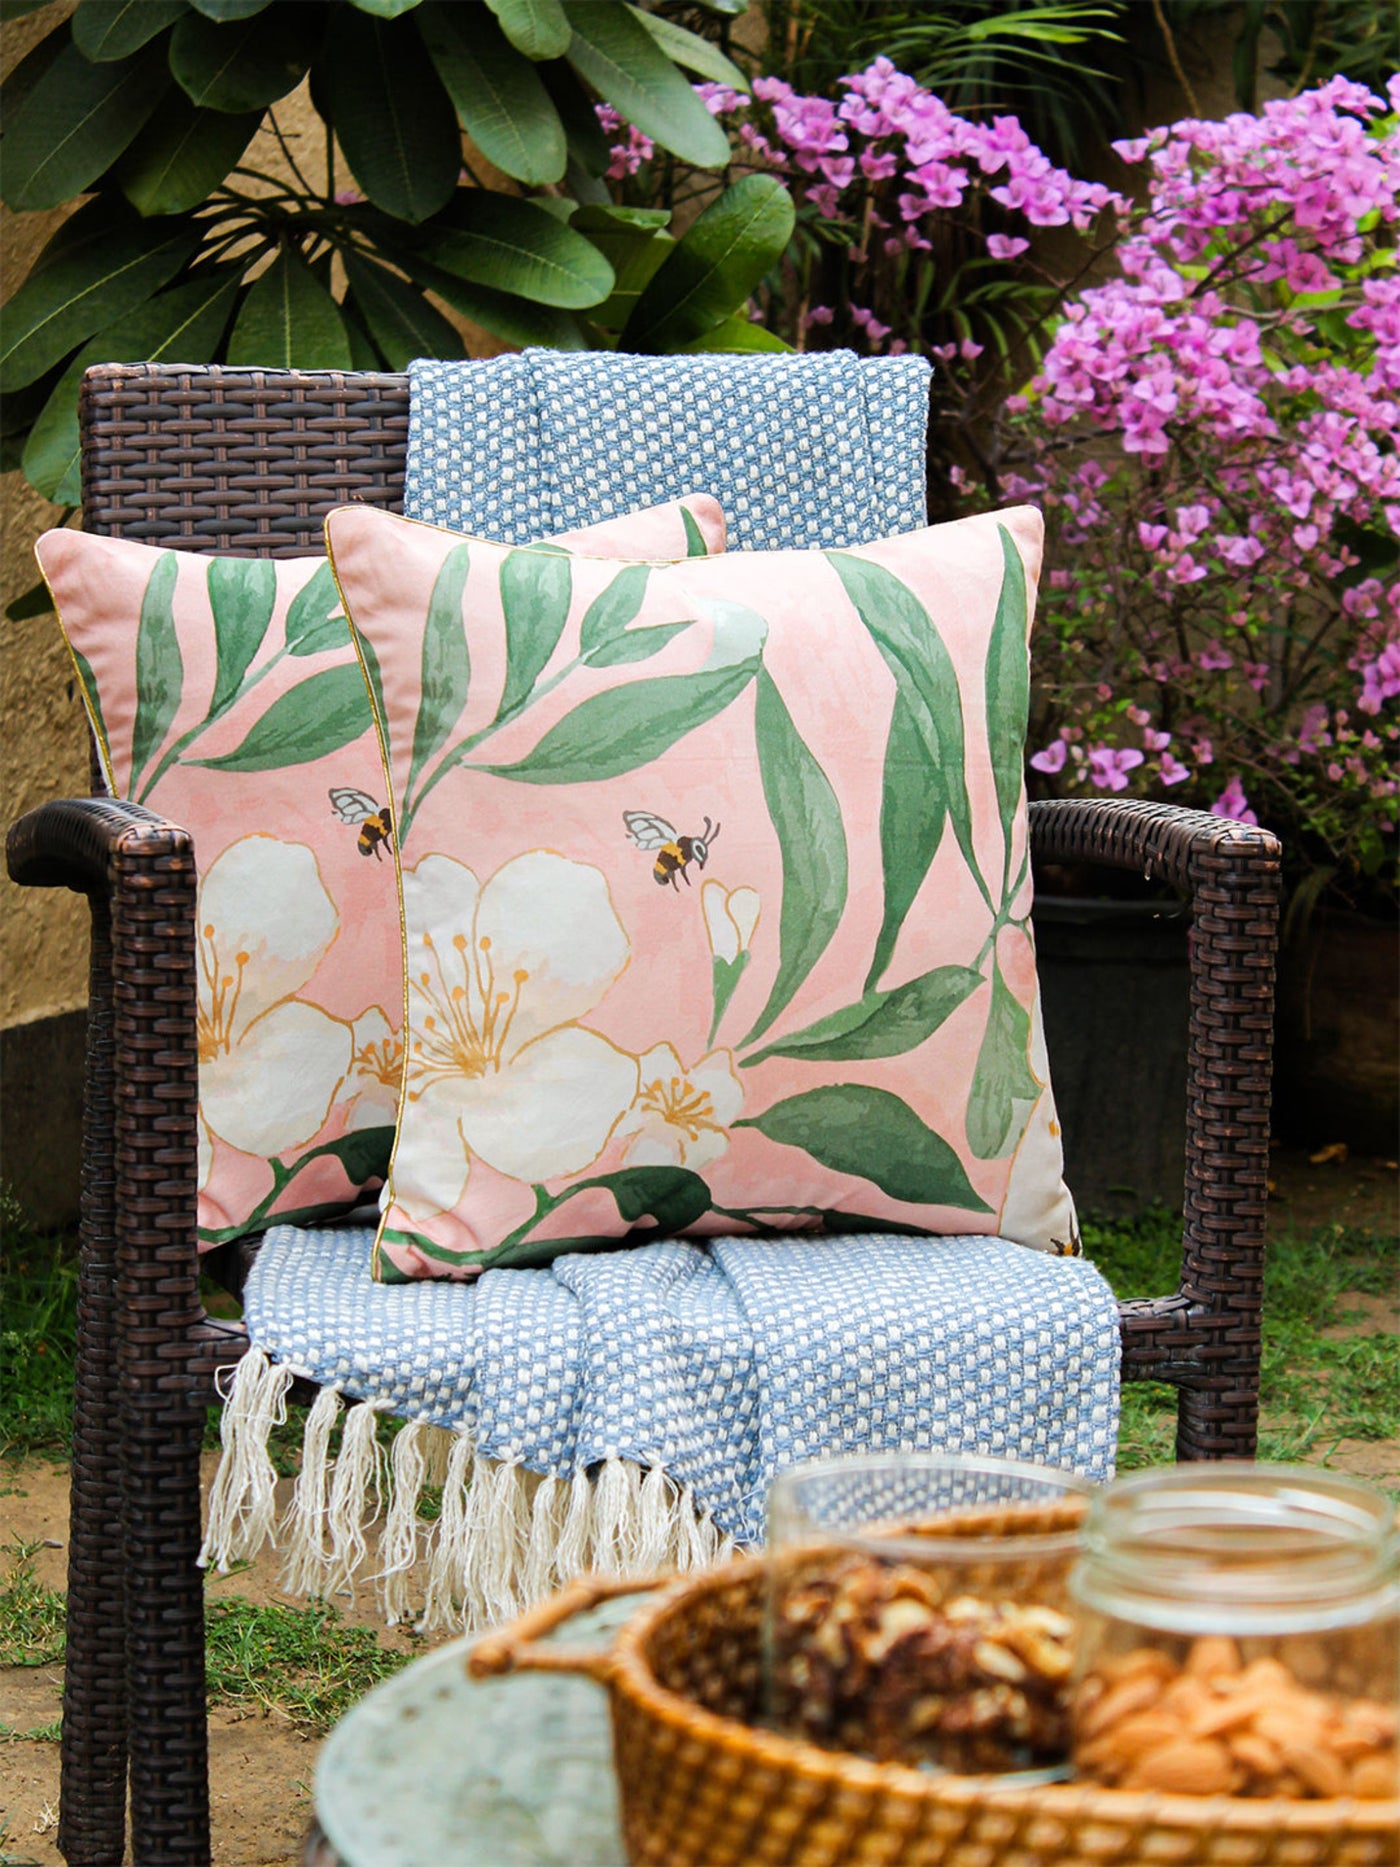 Cushion Cover - Pink Madhukar Set of 2